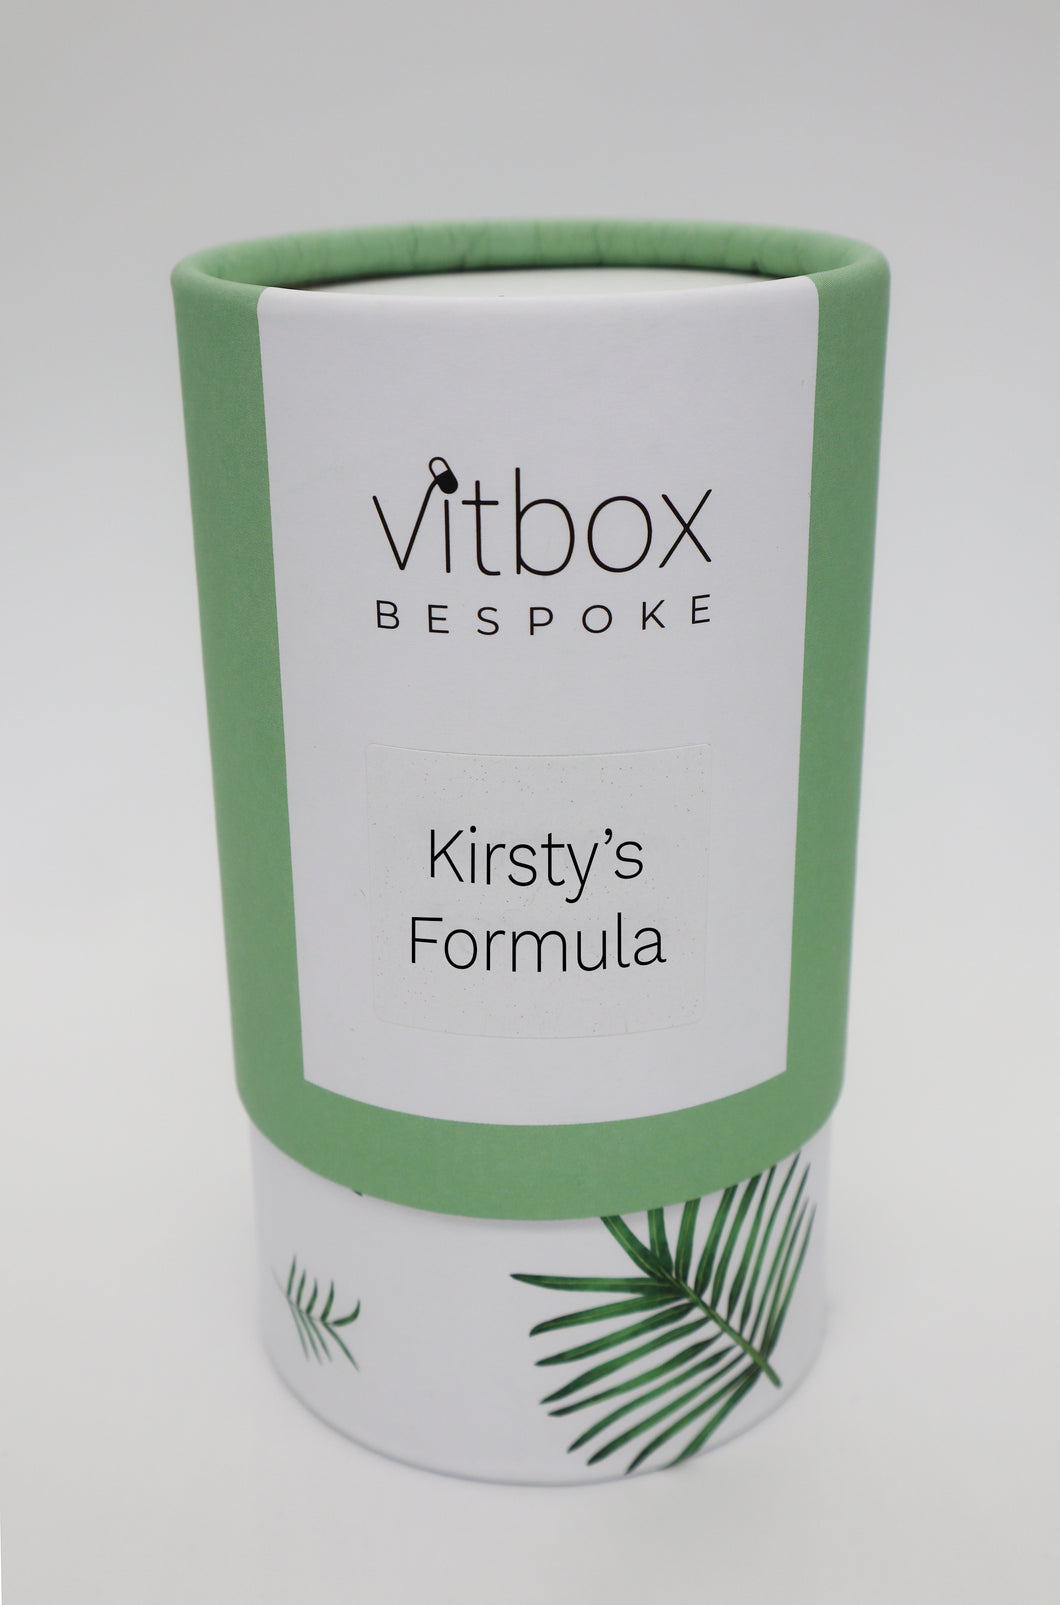 Kirsty's Vitbox Bespoke